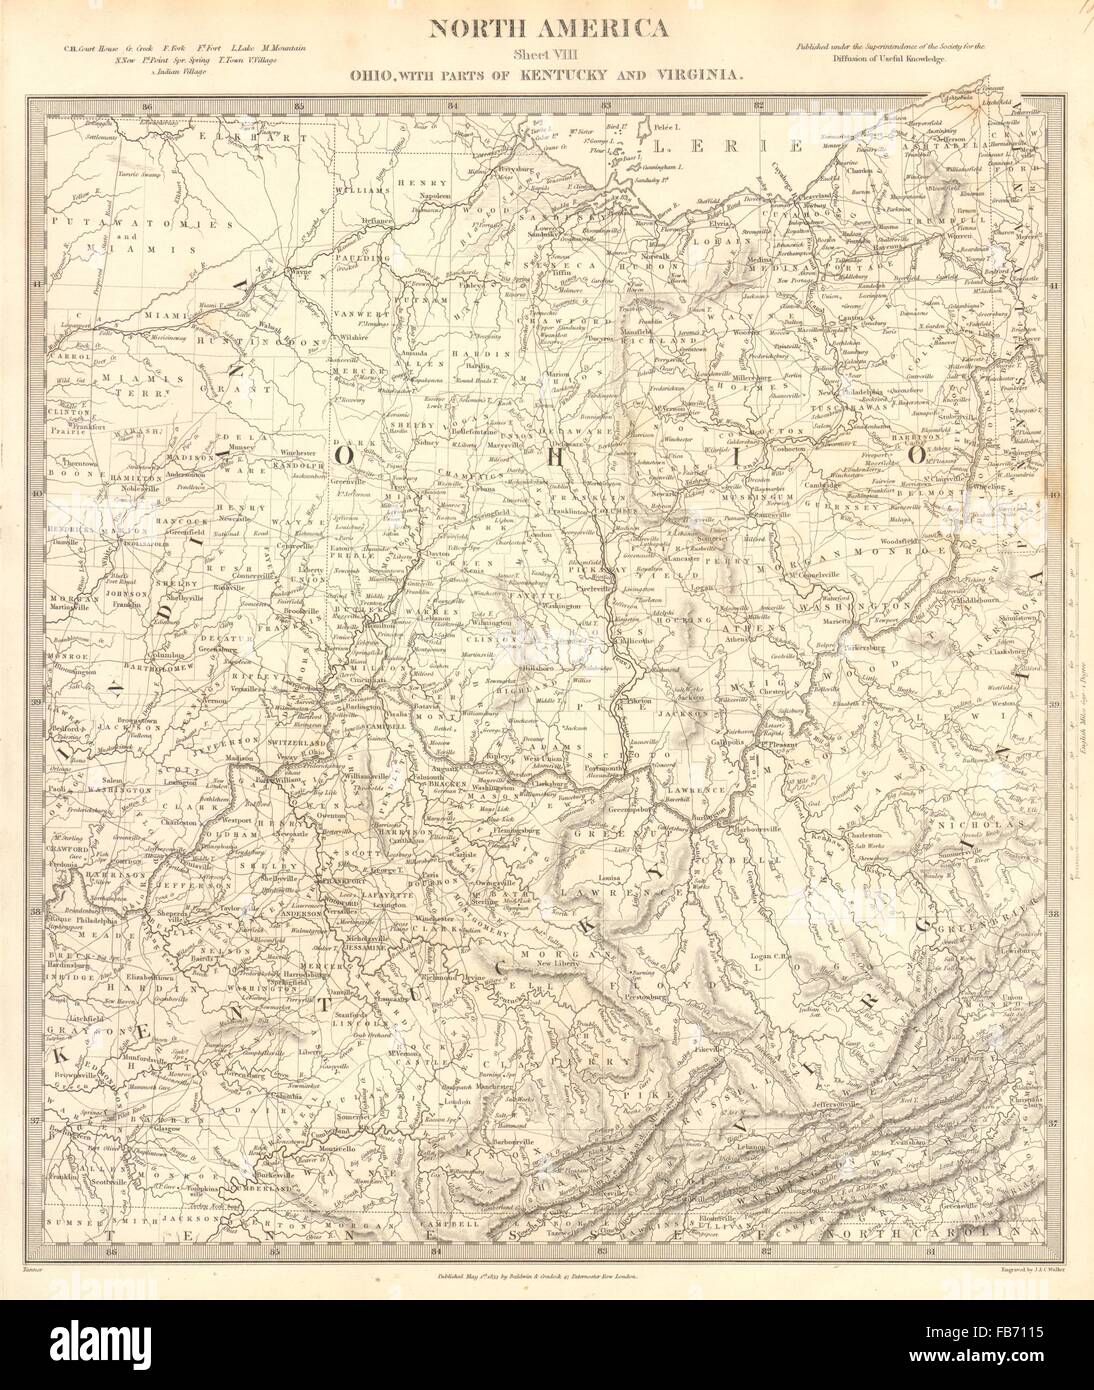 USA: Ohio with parts of Kentucky, Virginia & Indiana. Counties. SDUK, 1848 map Stock Photo